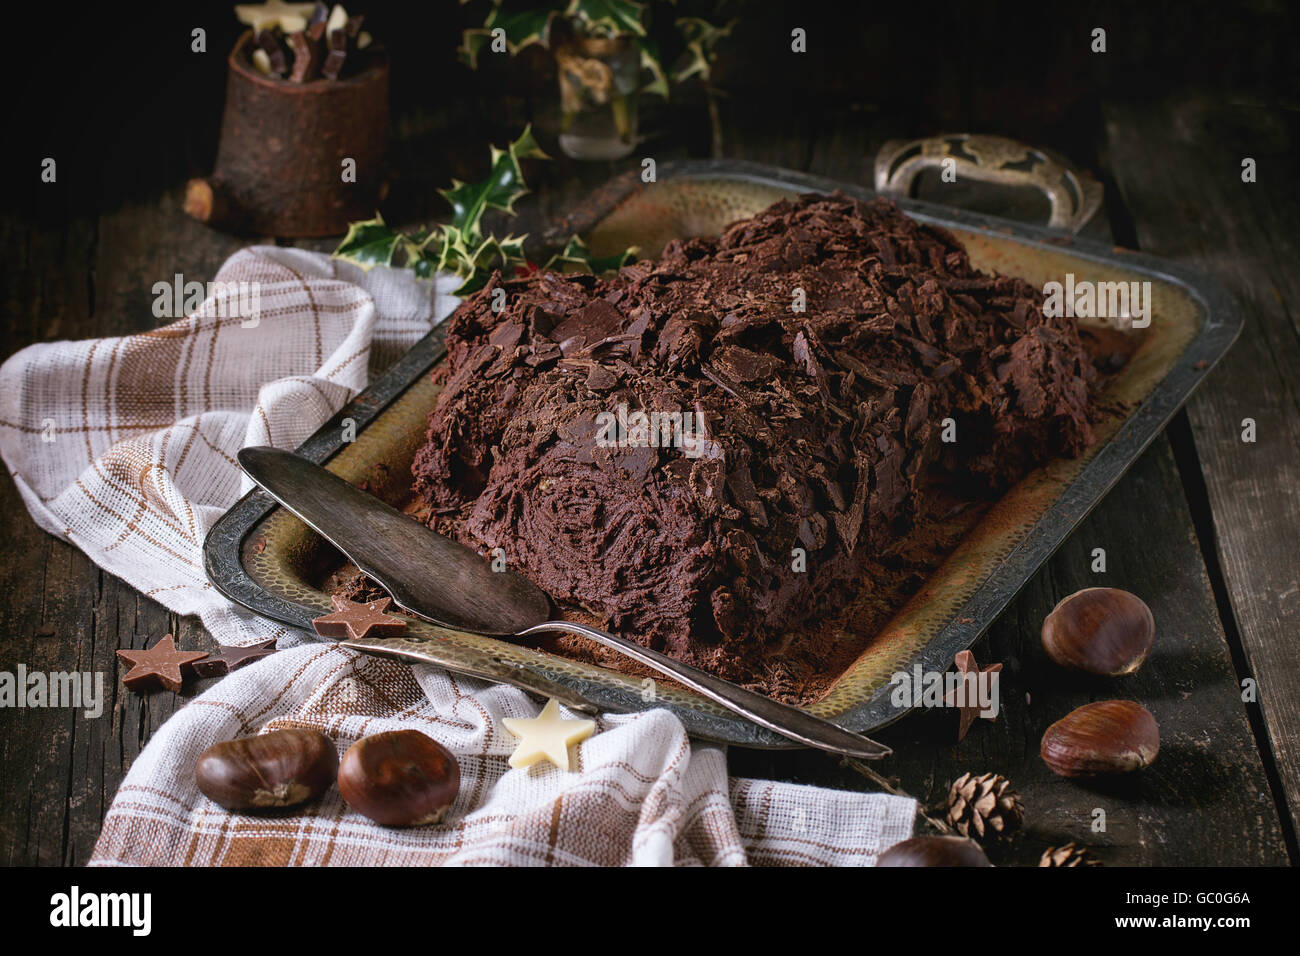 Homemade christmas chocolate yule log Stock Photo